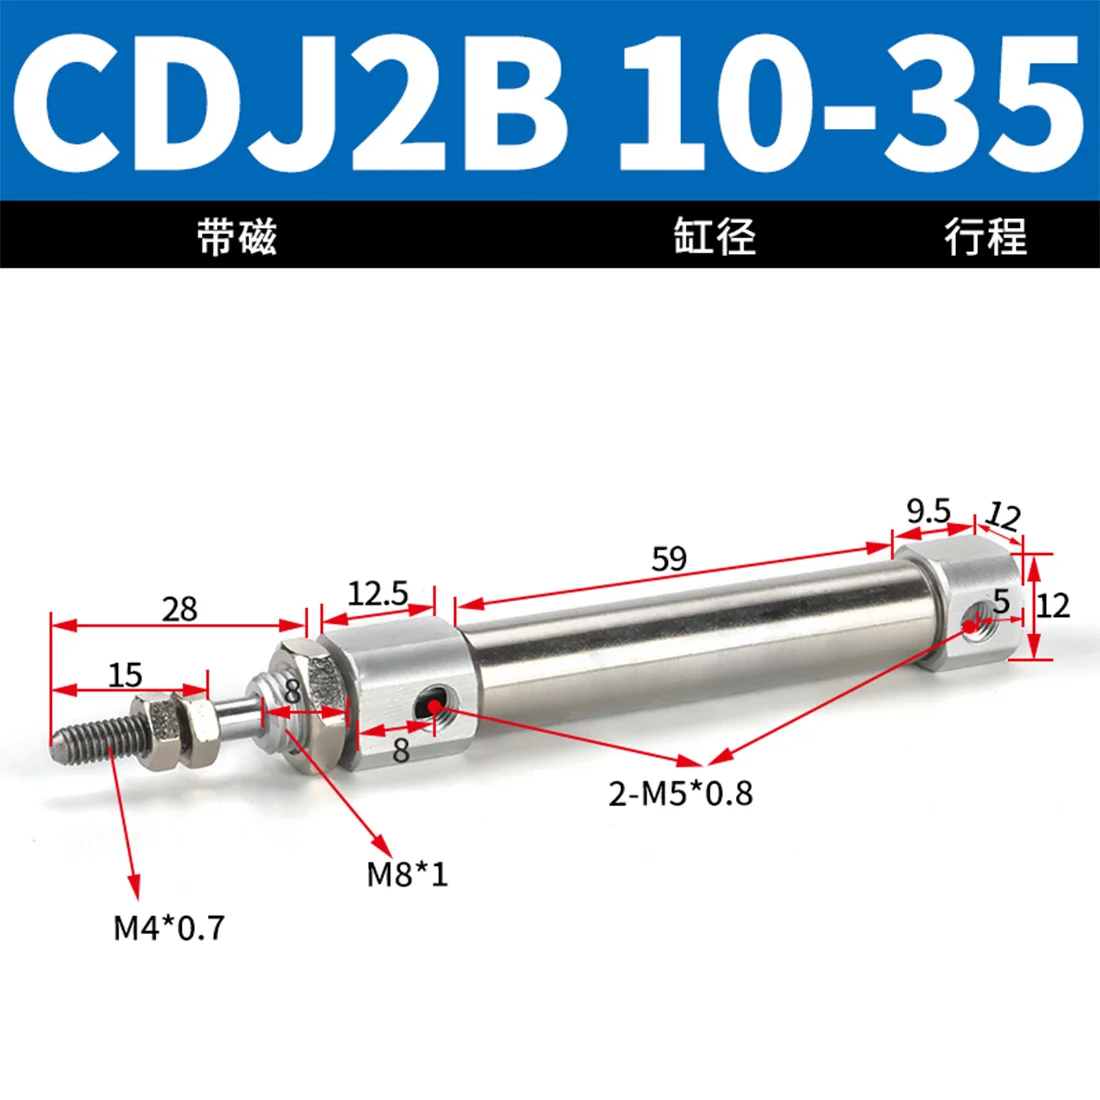 1Pcs 10mm Bore 35mm Stroke Mini Pneumatic Air Cylinder CDJ2B10-35-B 